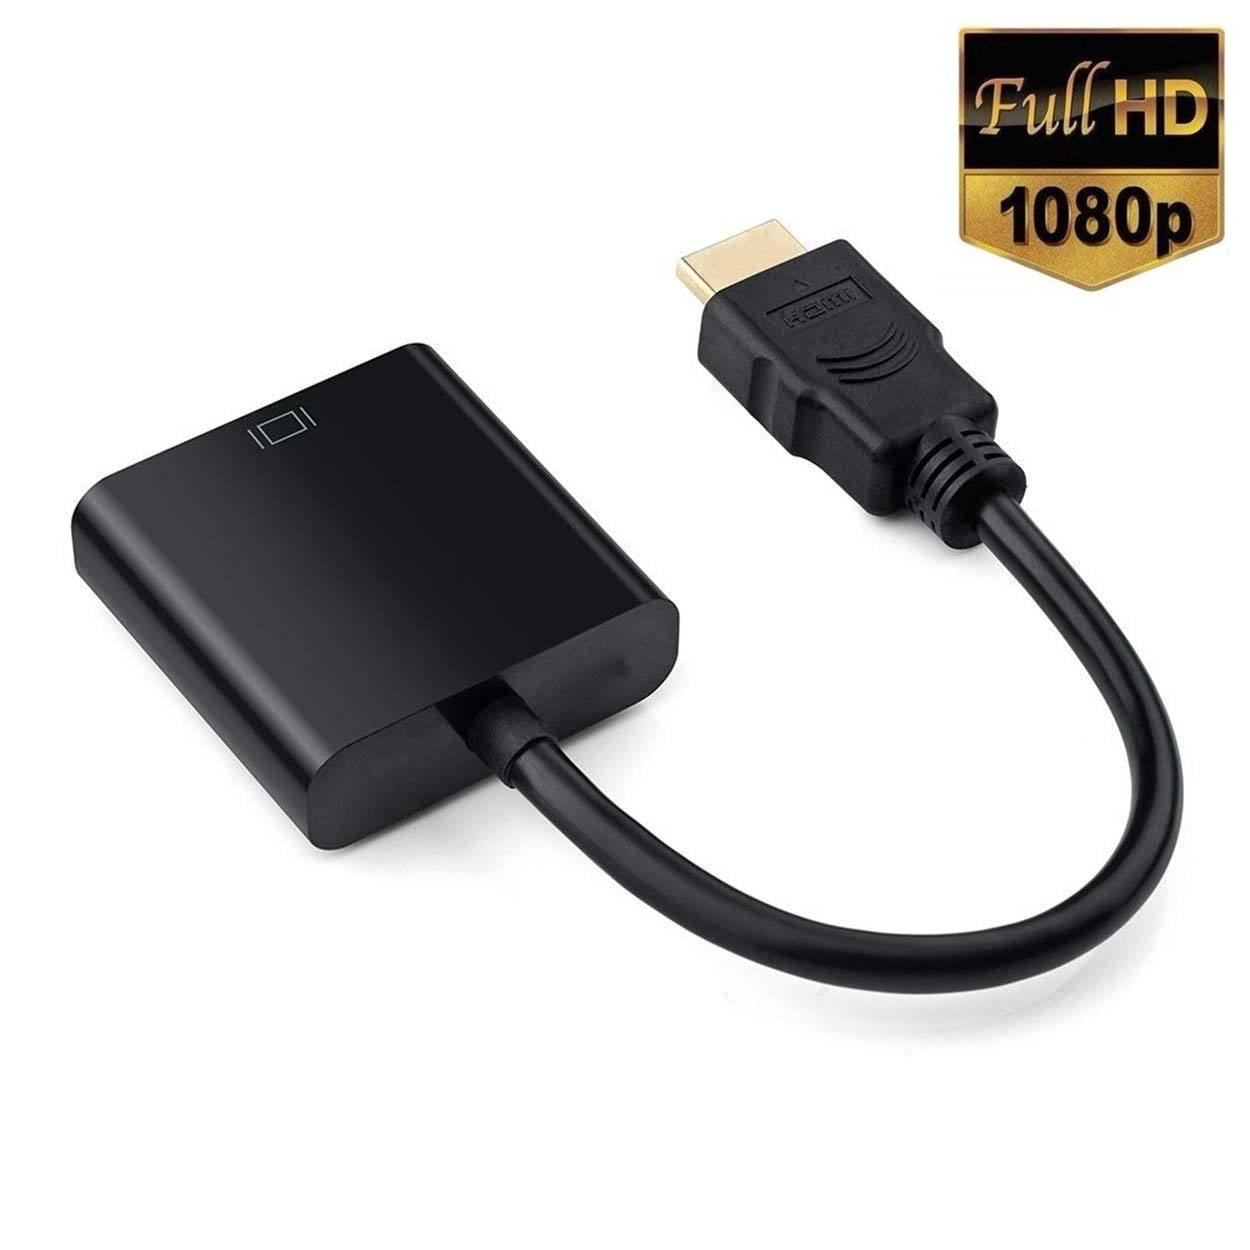 HDMI to VGA adapter cable, single port, black (A-HDMI-VGA-04)